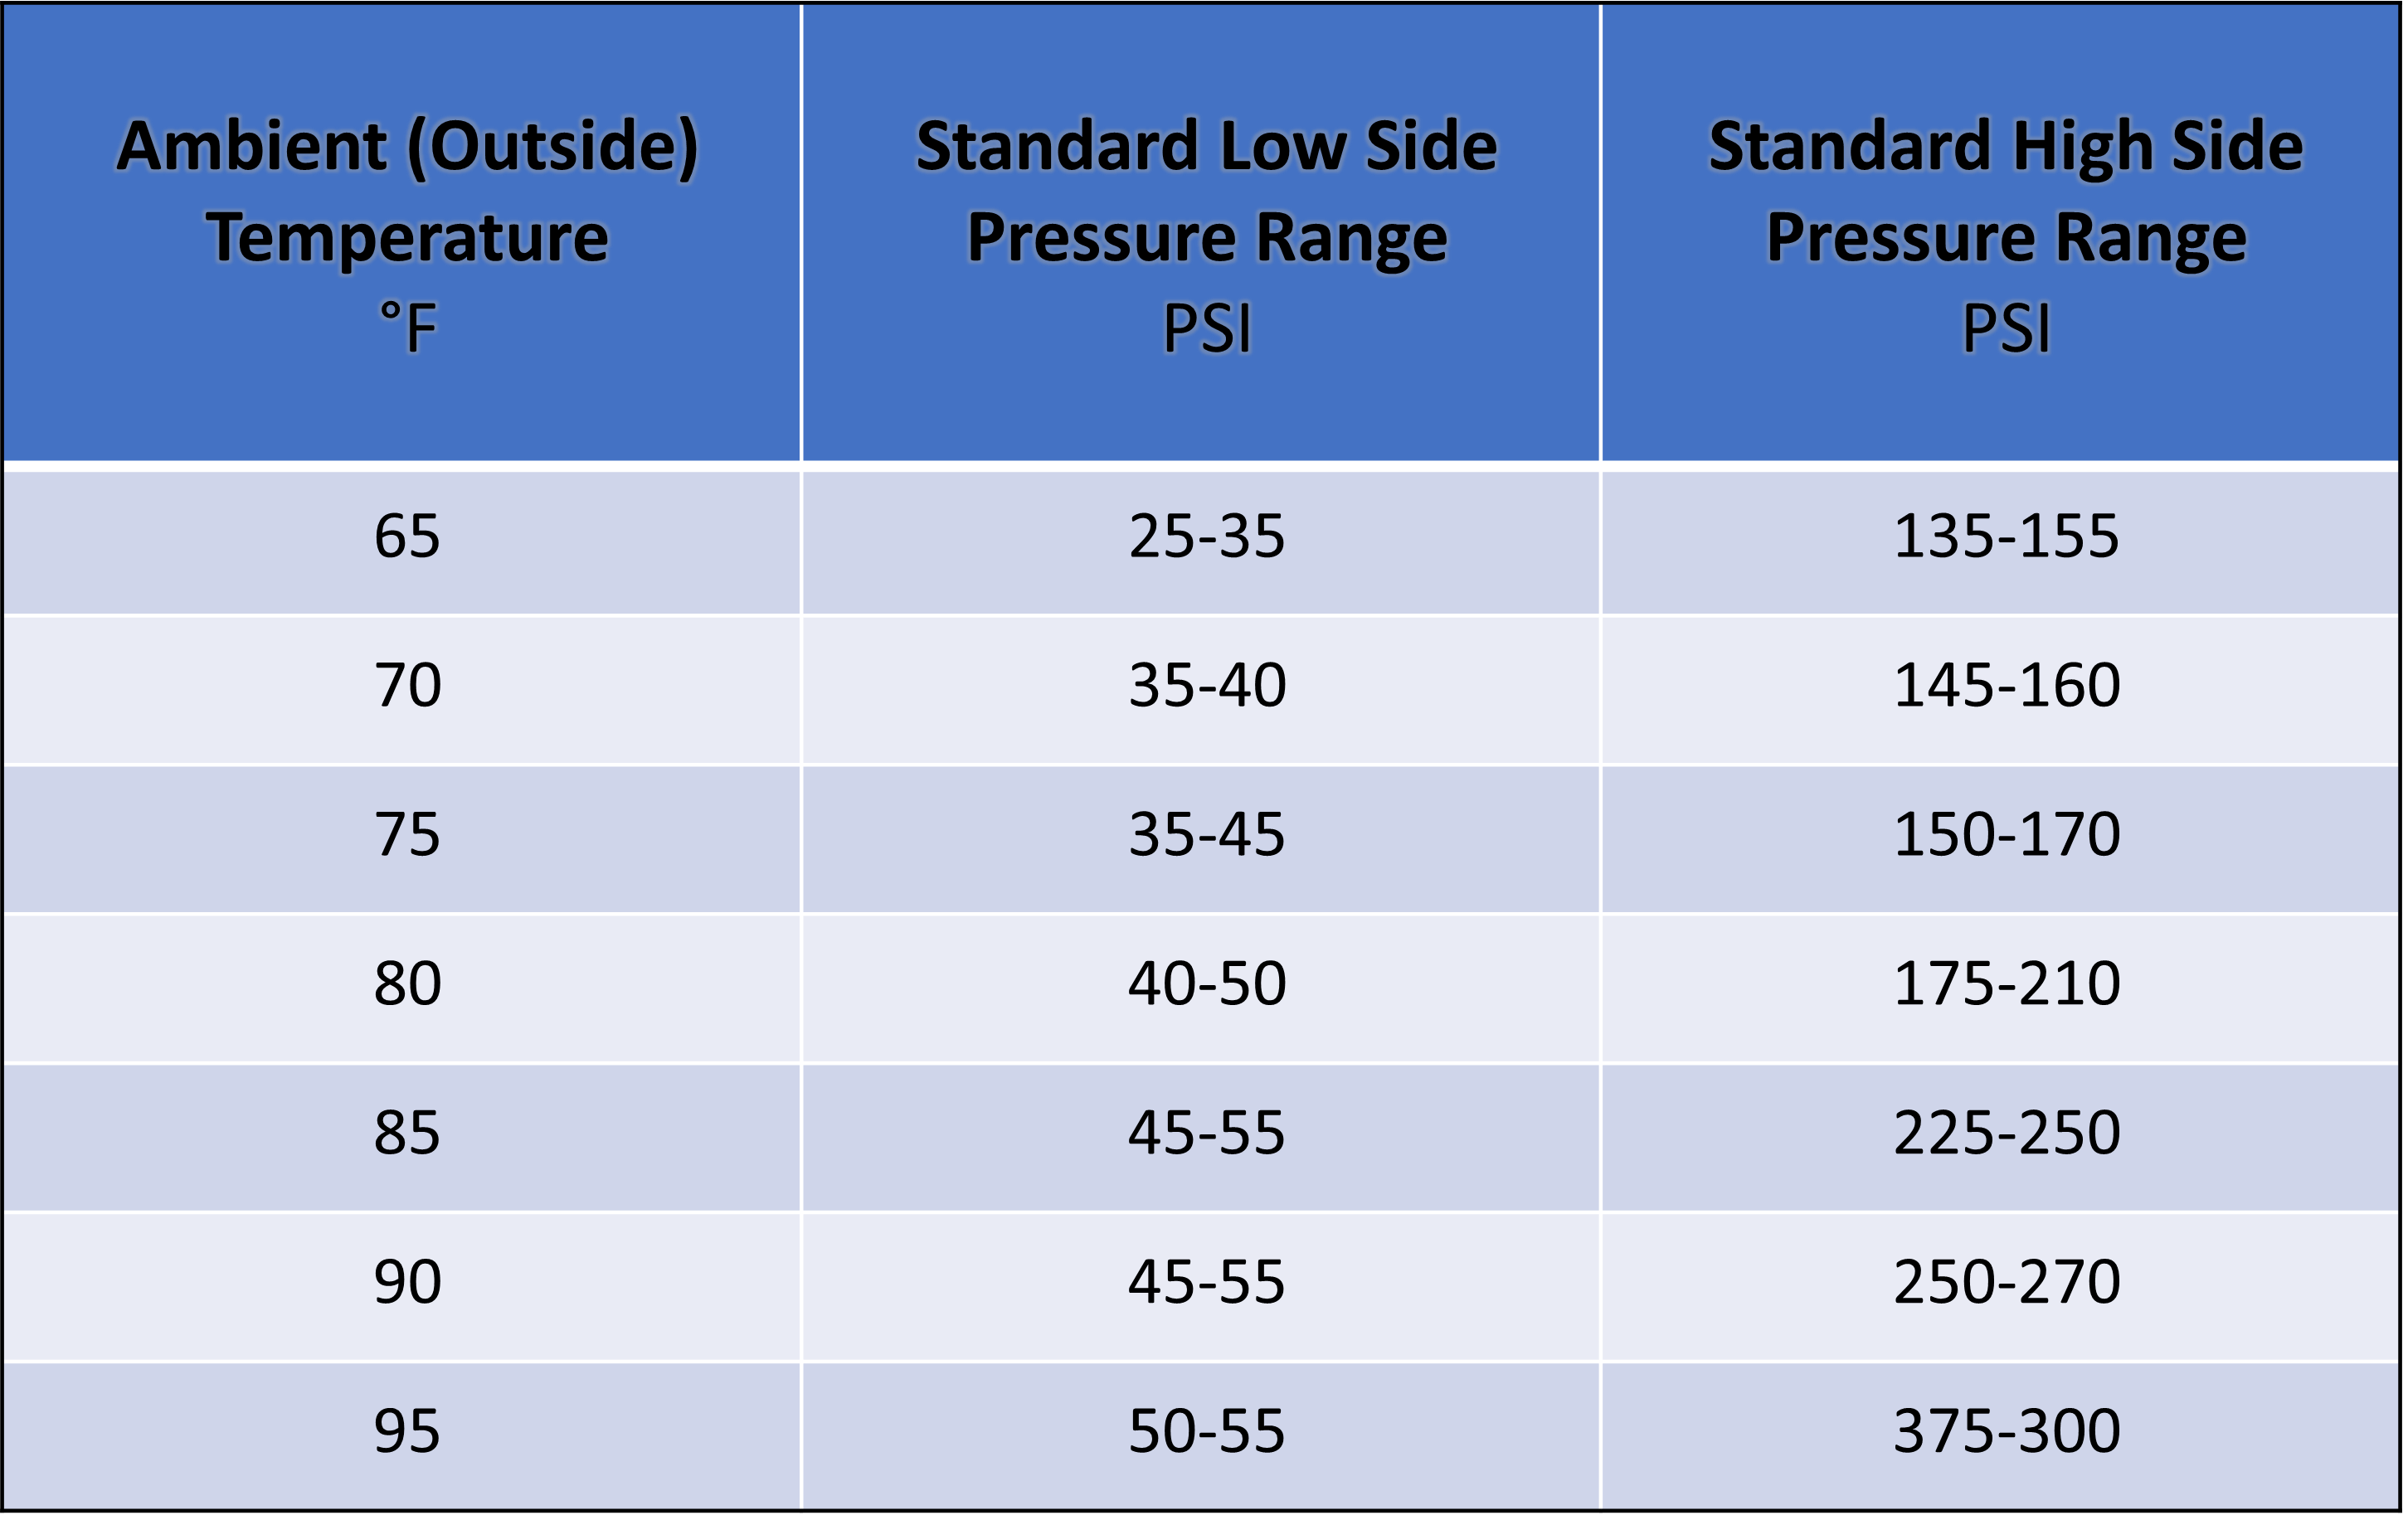 Automotive 134a Pressure Chart